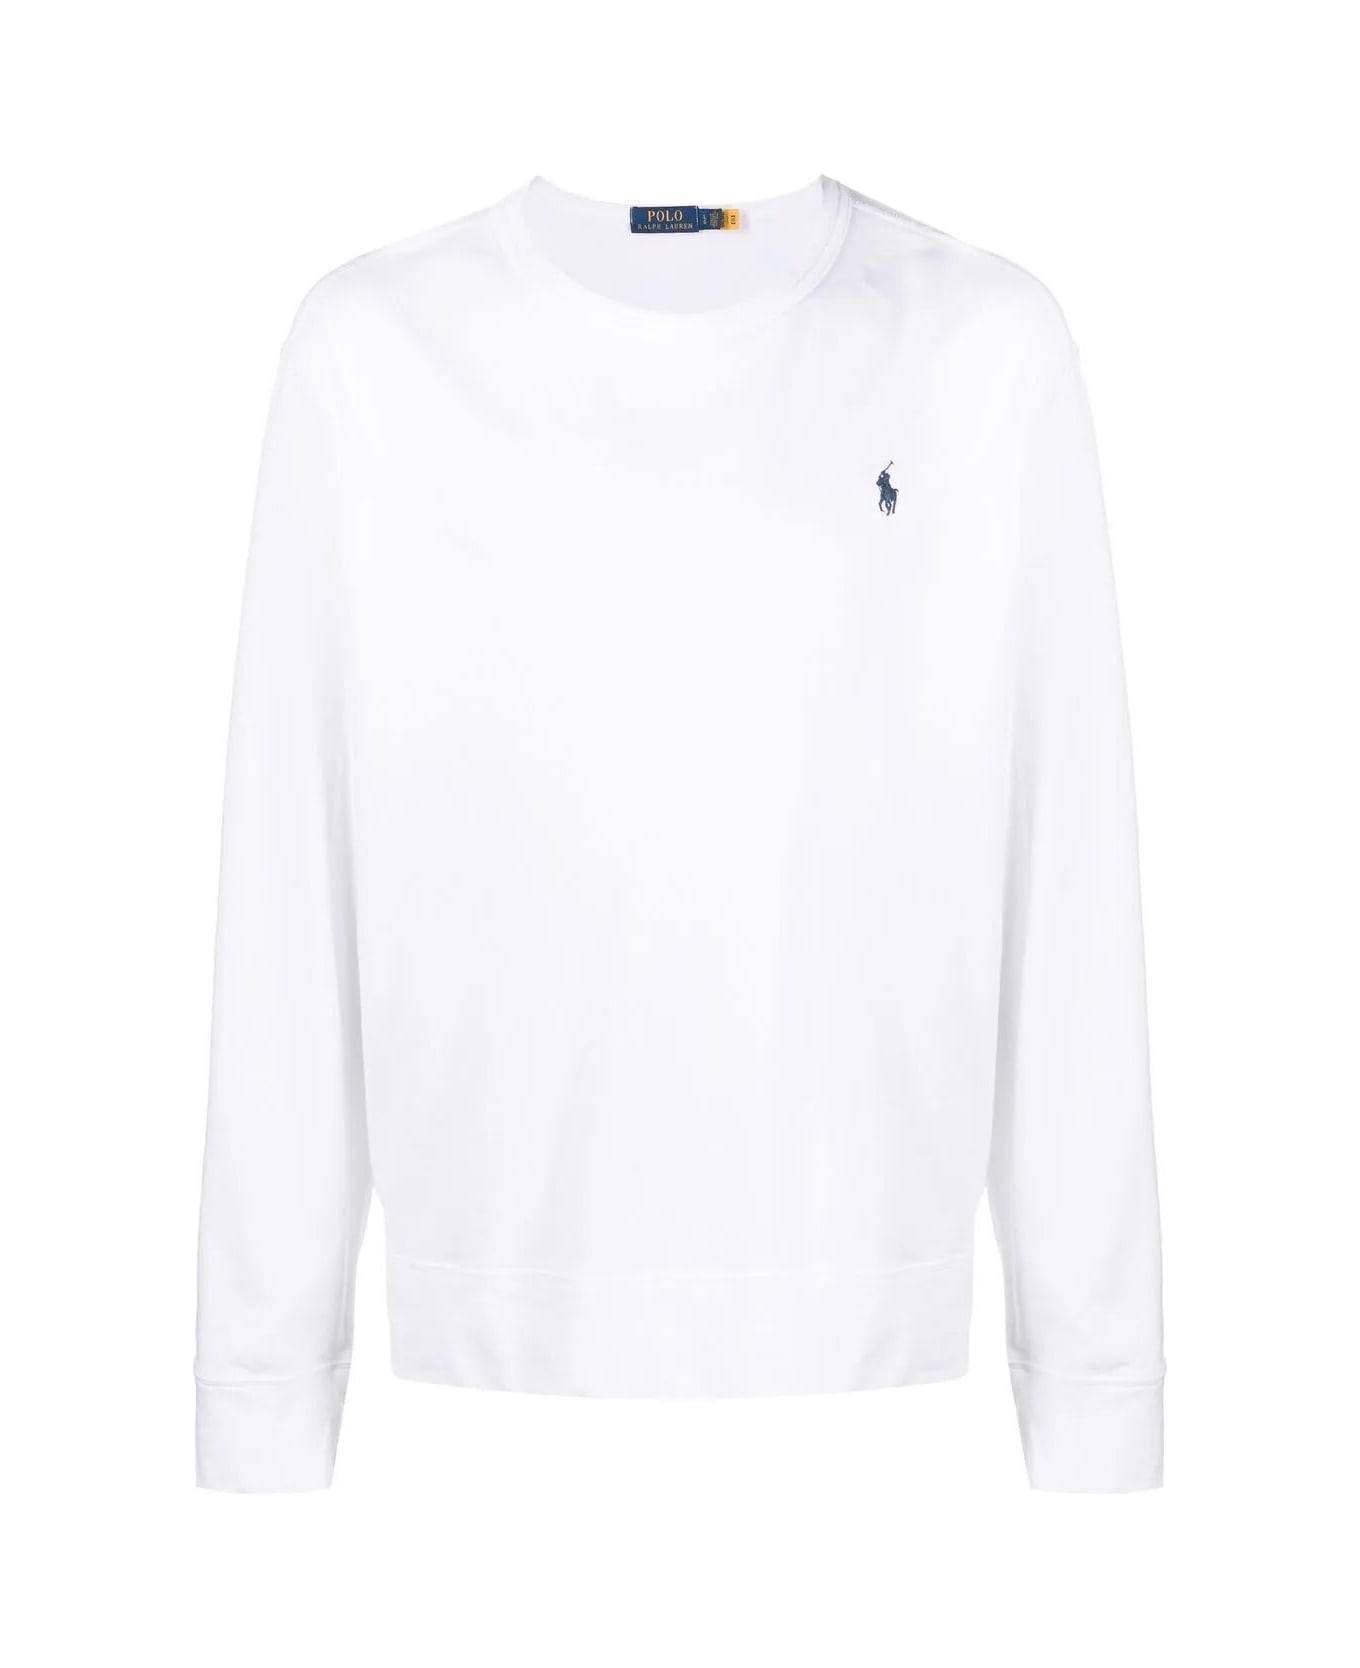 Polo Ralph Lauren Crew Neck Sweatshirt - White